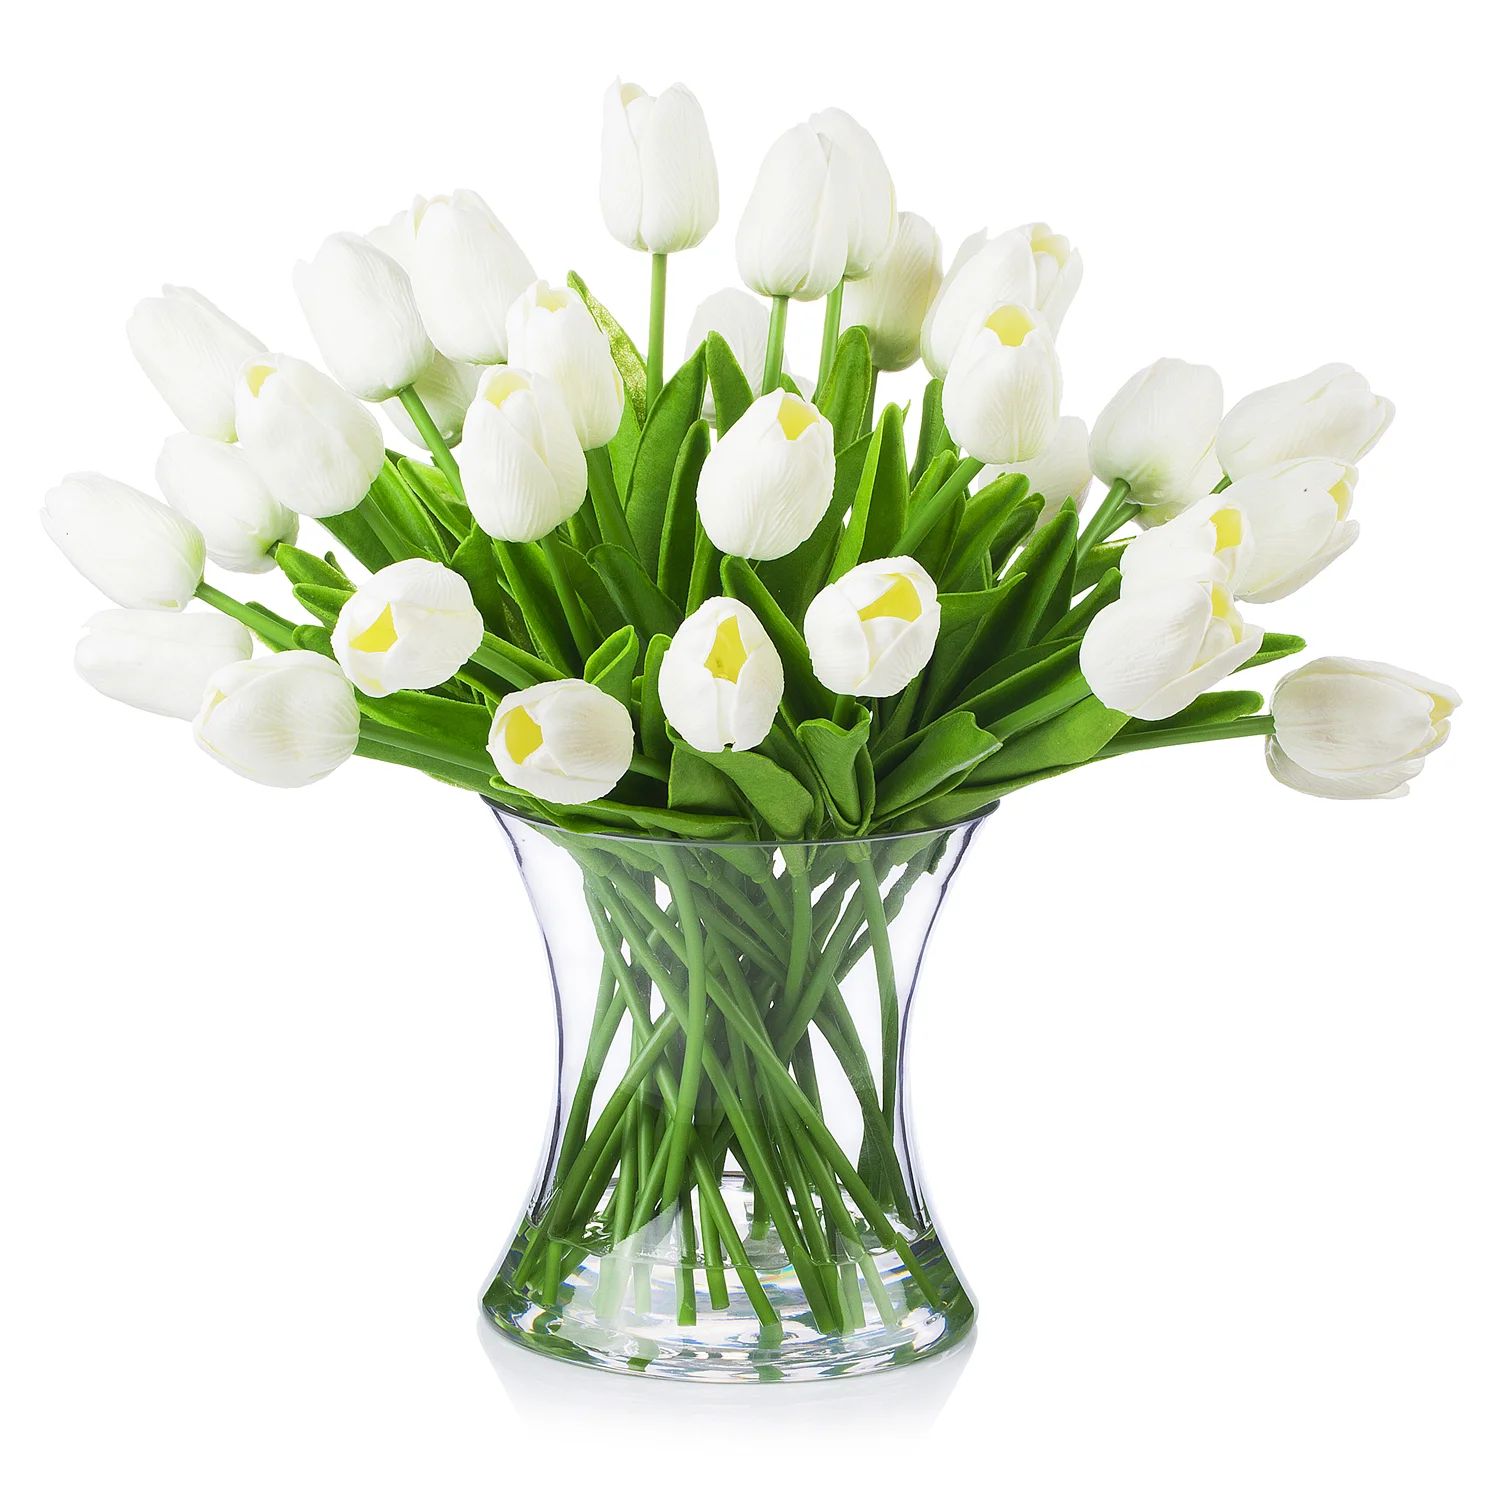 Real Touch Tulip Floral Arrangement in Vase | Wayfair Professional